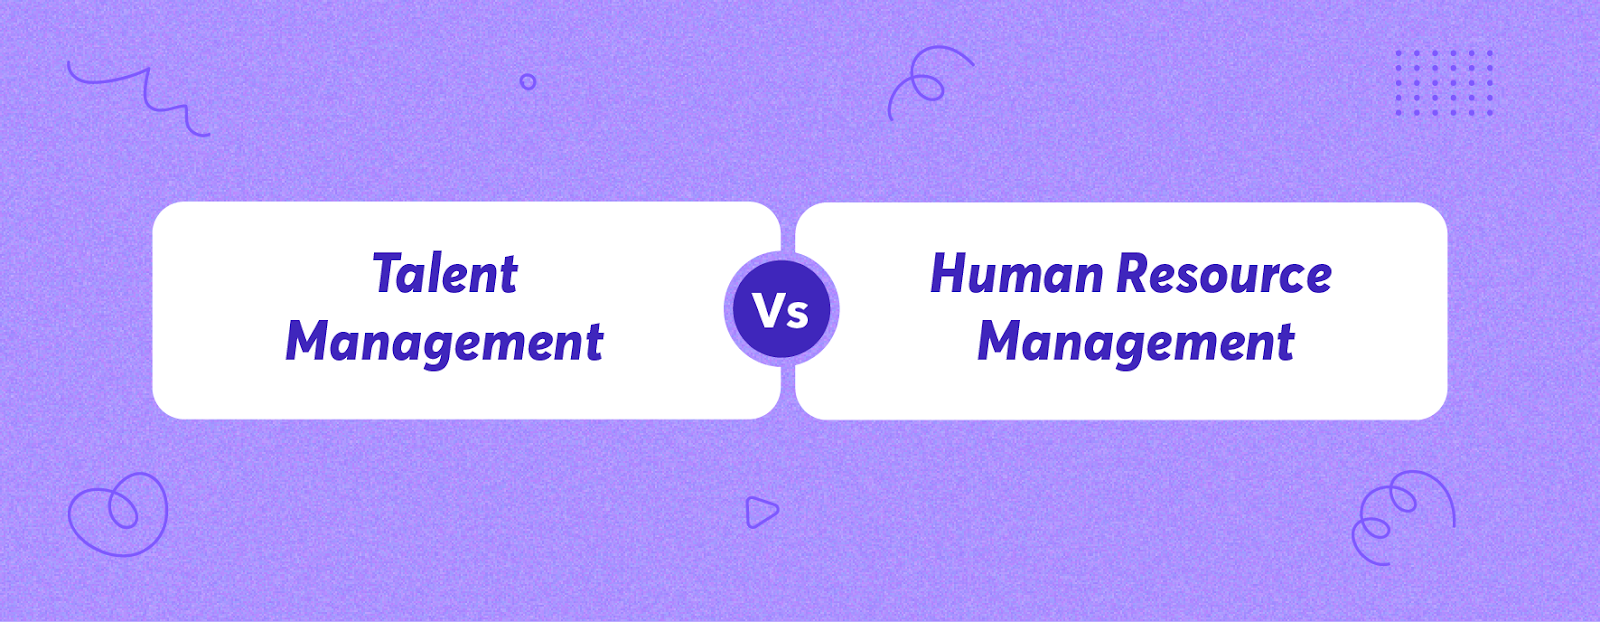 talent management in human resource management